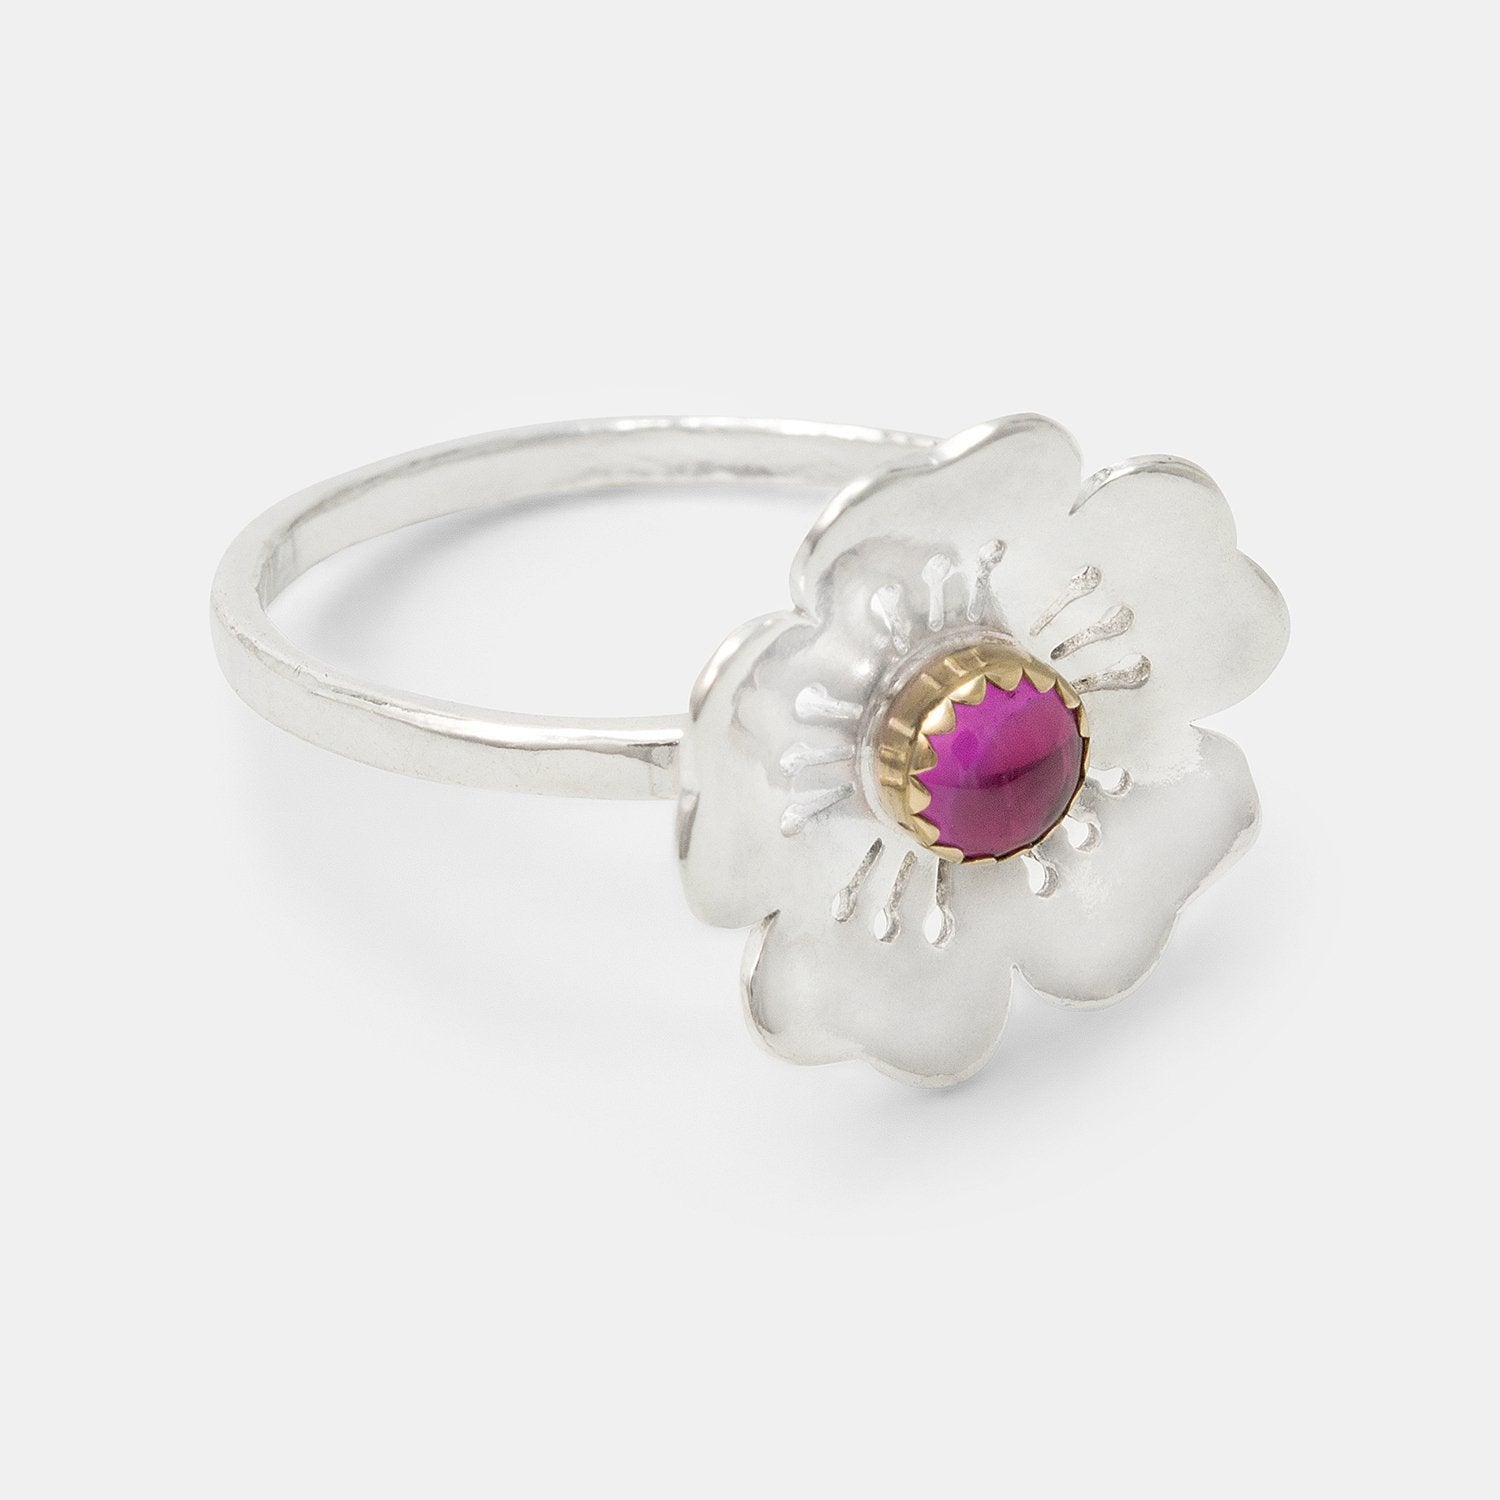 Cherry blossom & pink sapphire ring - Simone Walsh Jewellery Australia